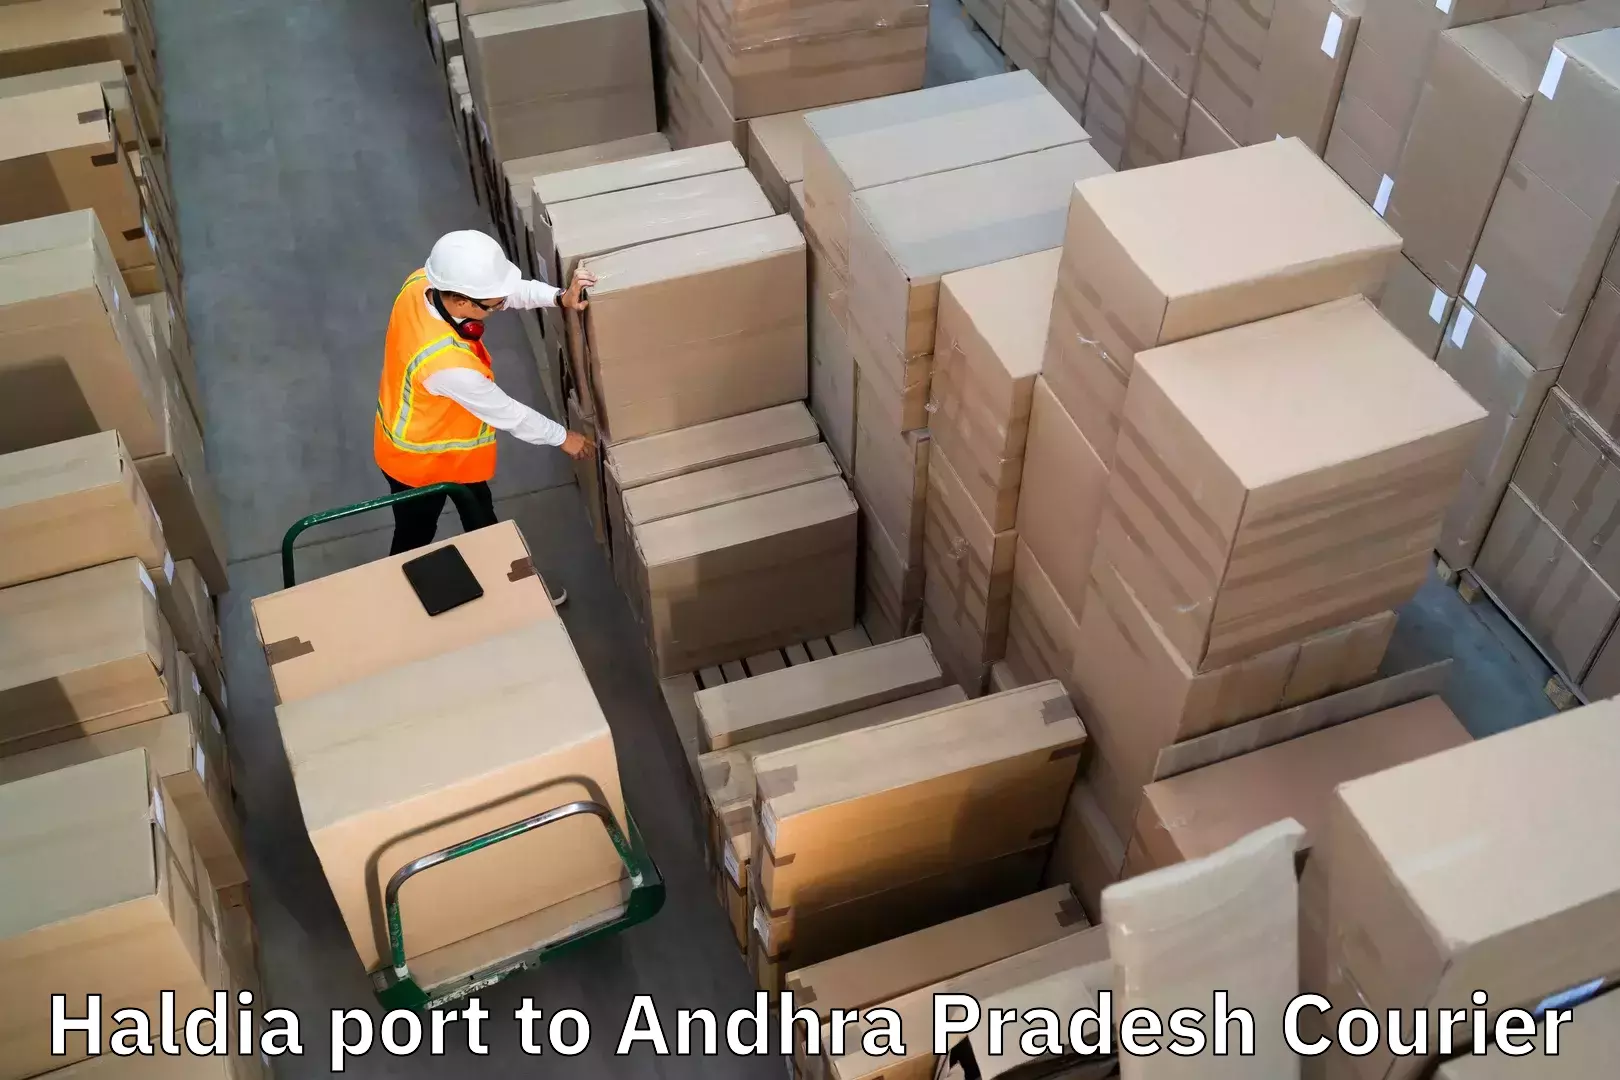 Baggage relocation service in Haldia port to Gudivada